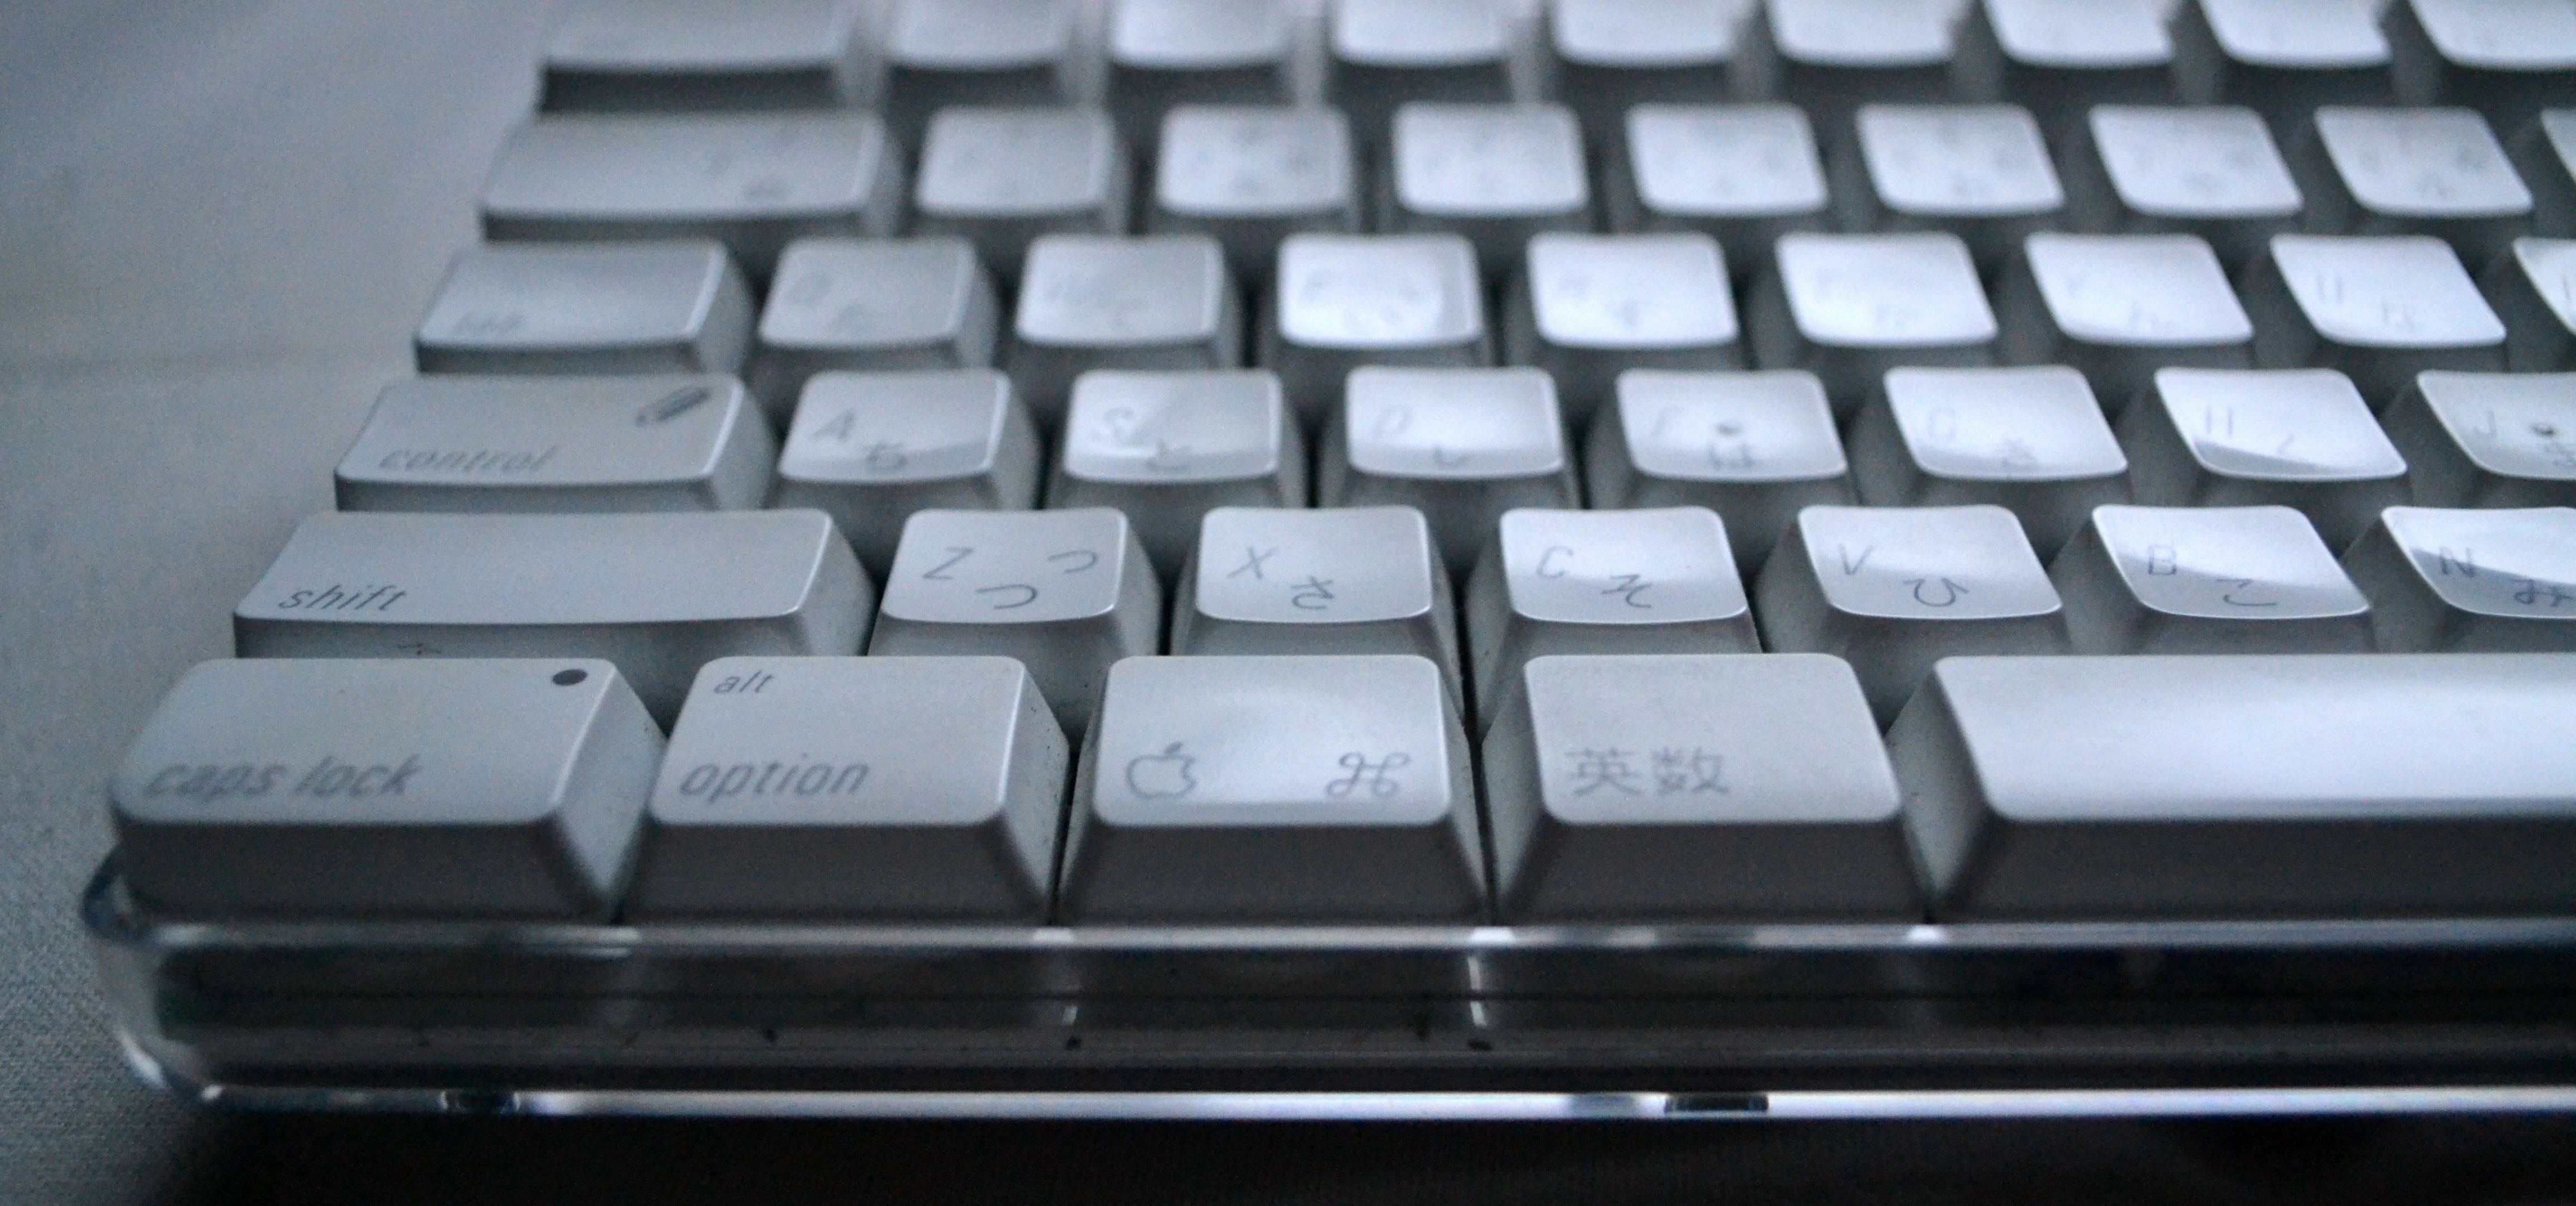 Japanese Mac keyboard, 2008 (2)